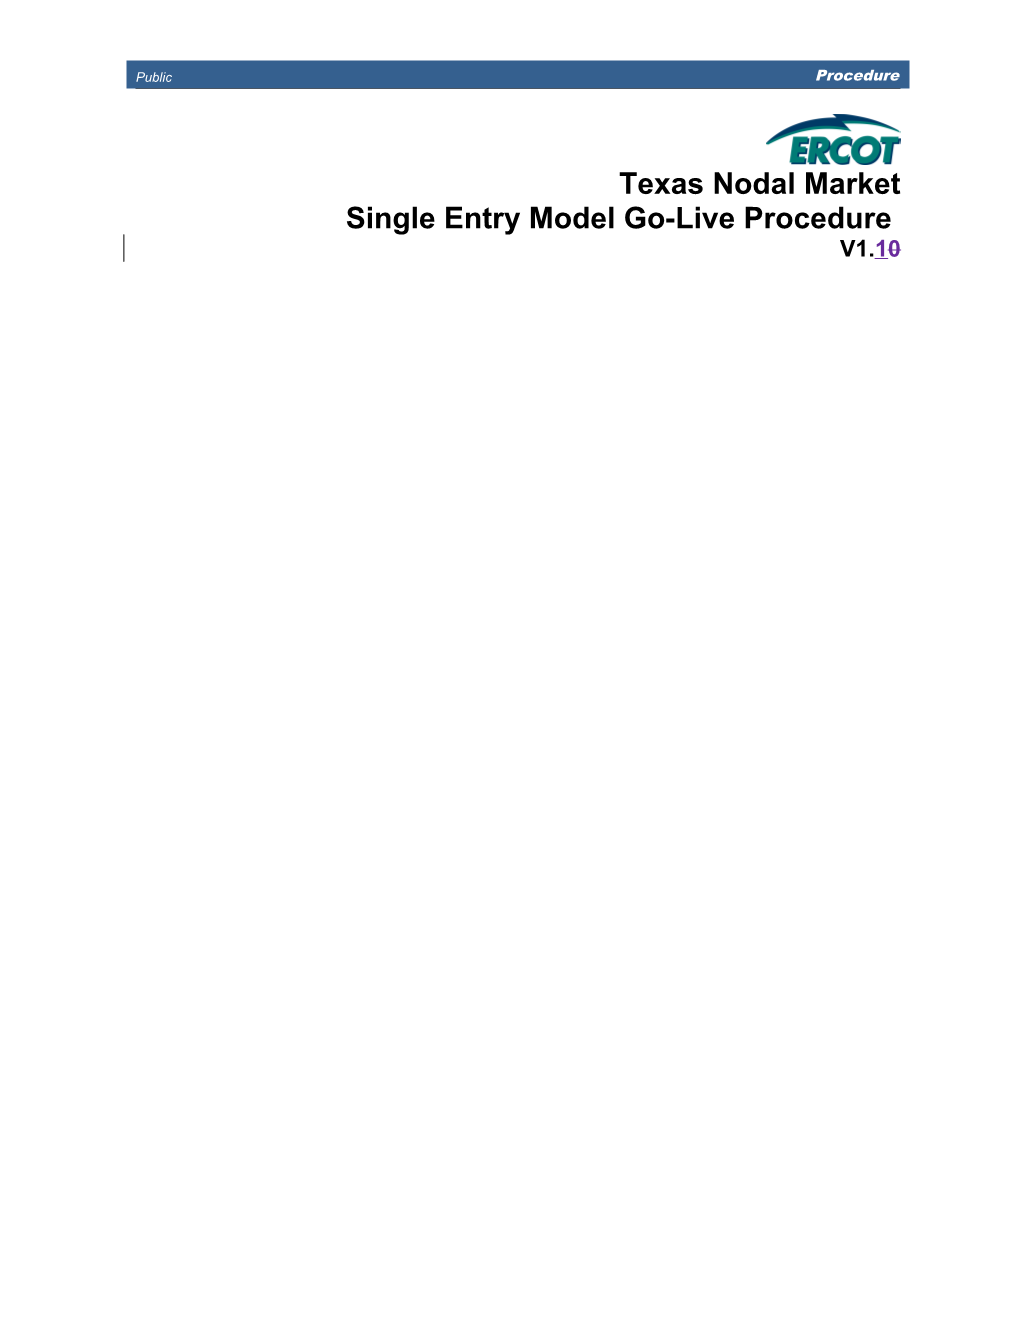 Texas Nodal Market SEM Go-Live Procedure